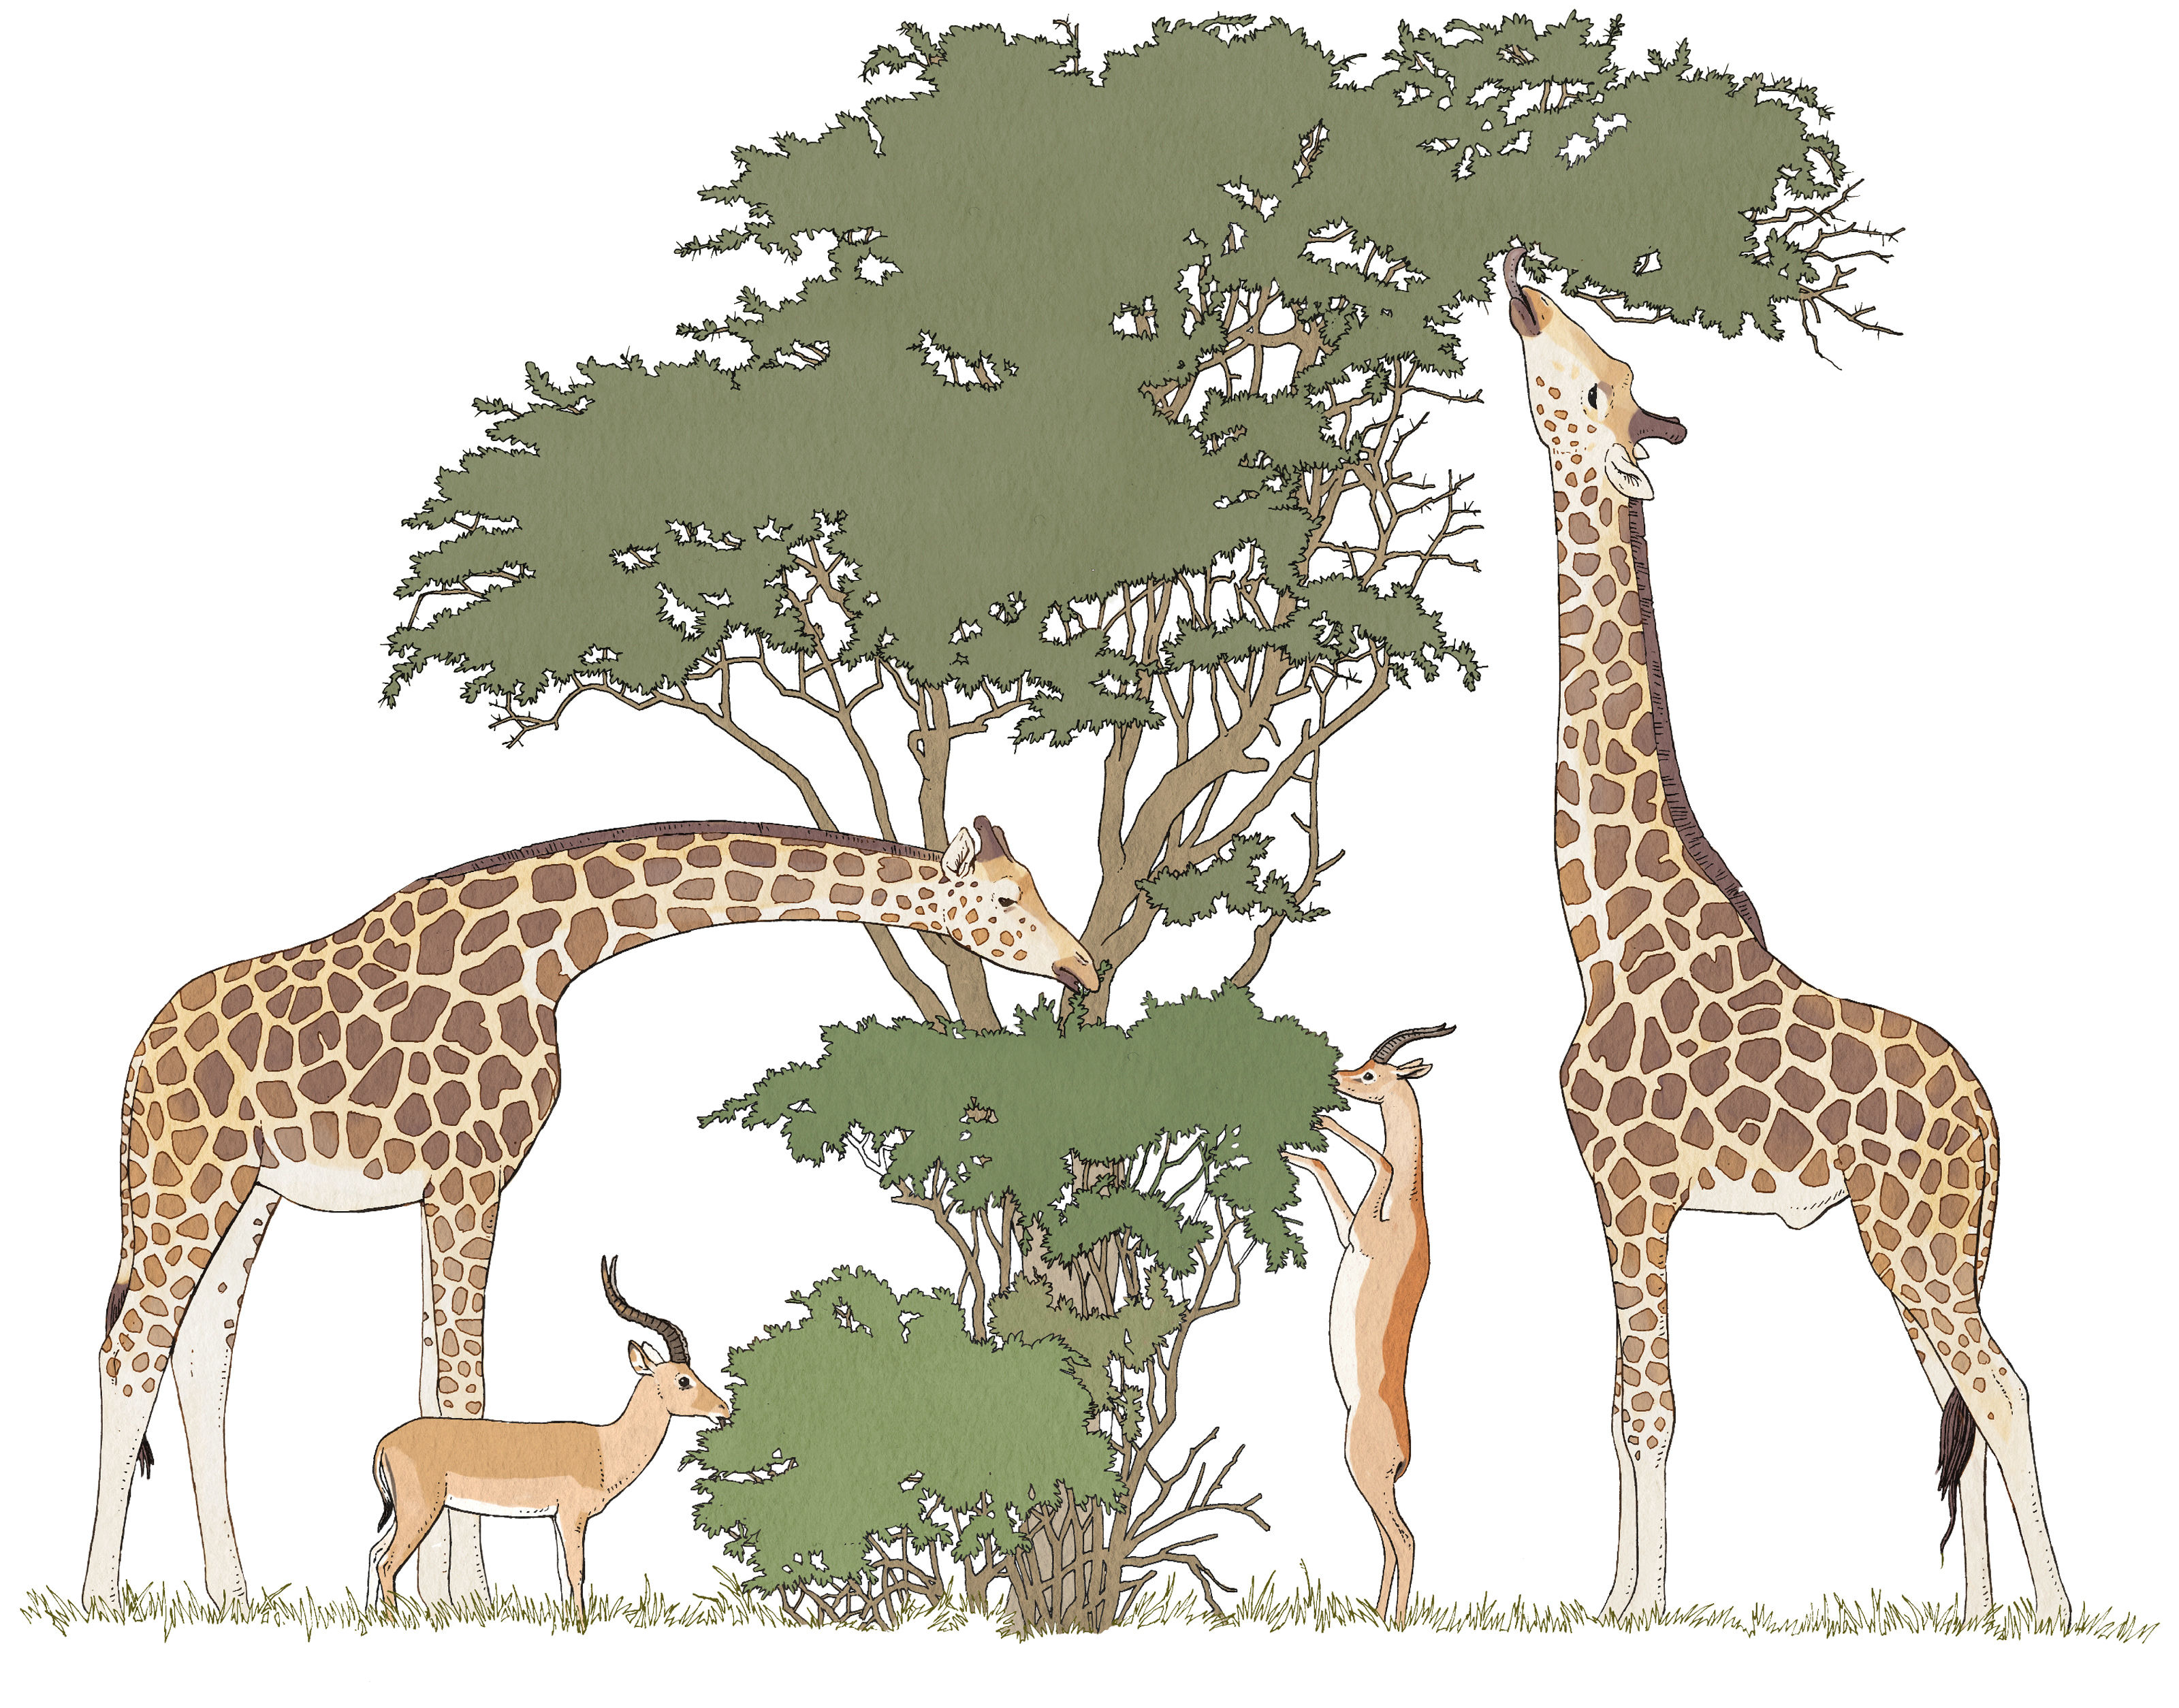 Knie_Kinderzoo_Giraffen-etagen_bunterhund_Illustration